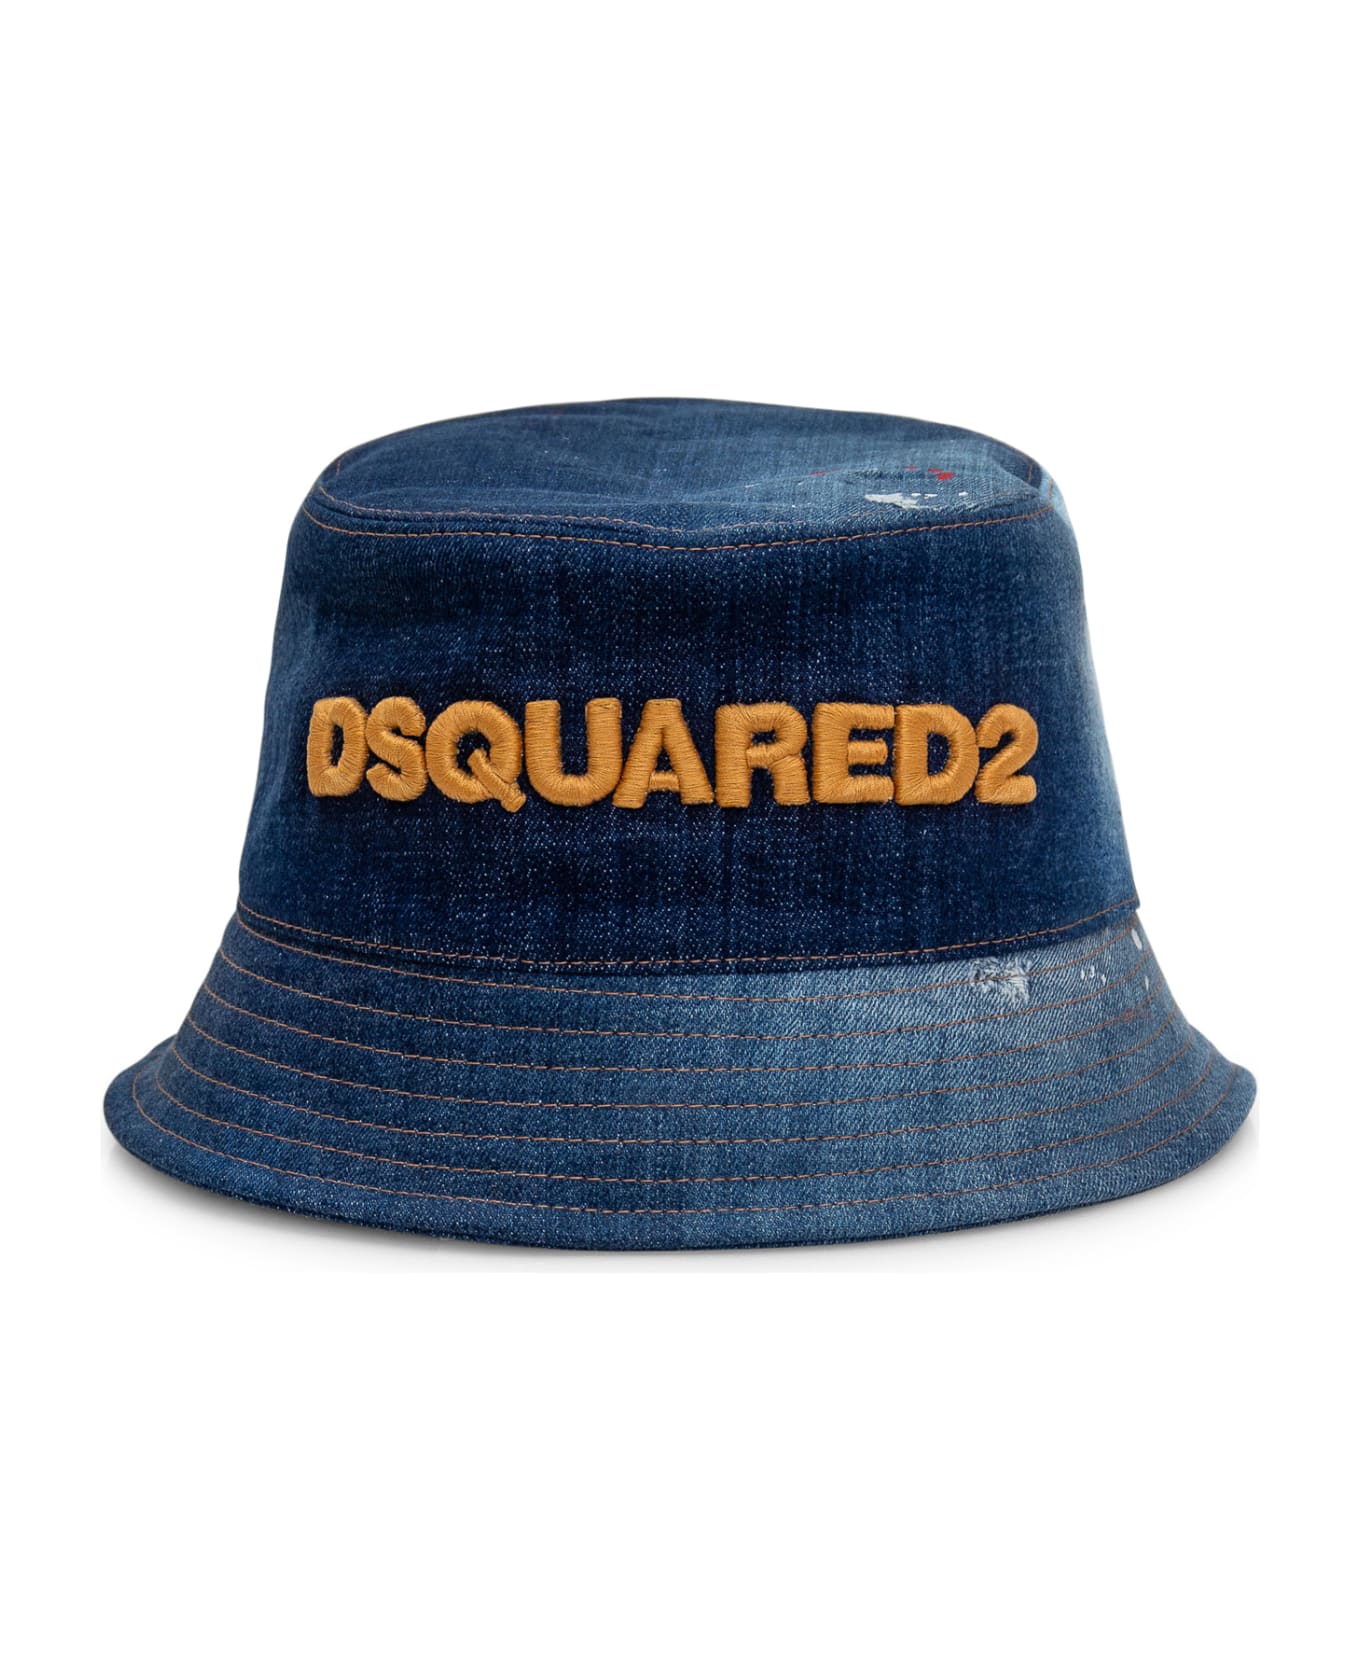 Dsquared2 Denim Bucket Hat - DENIM 帽子